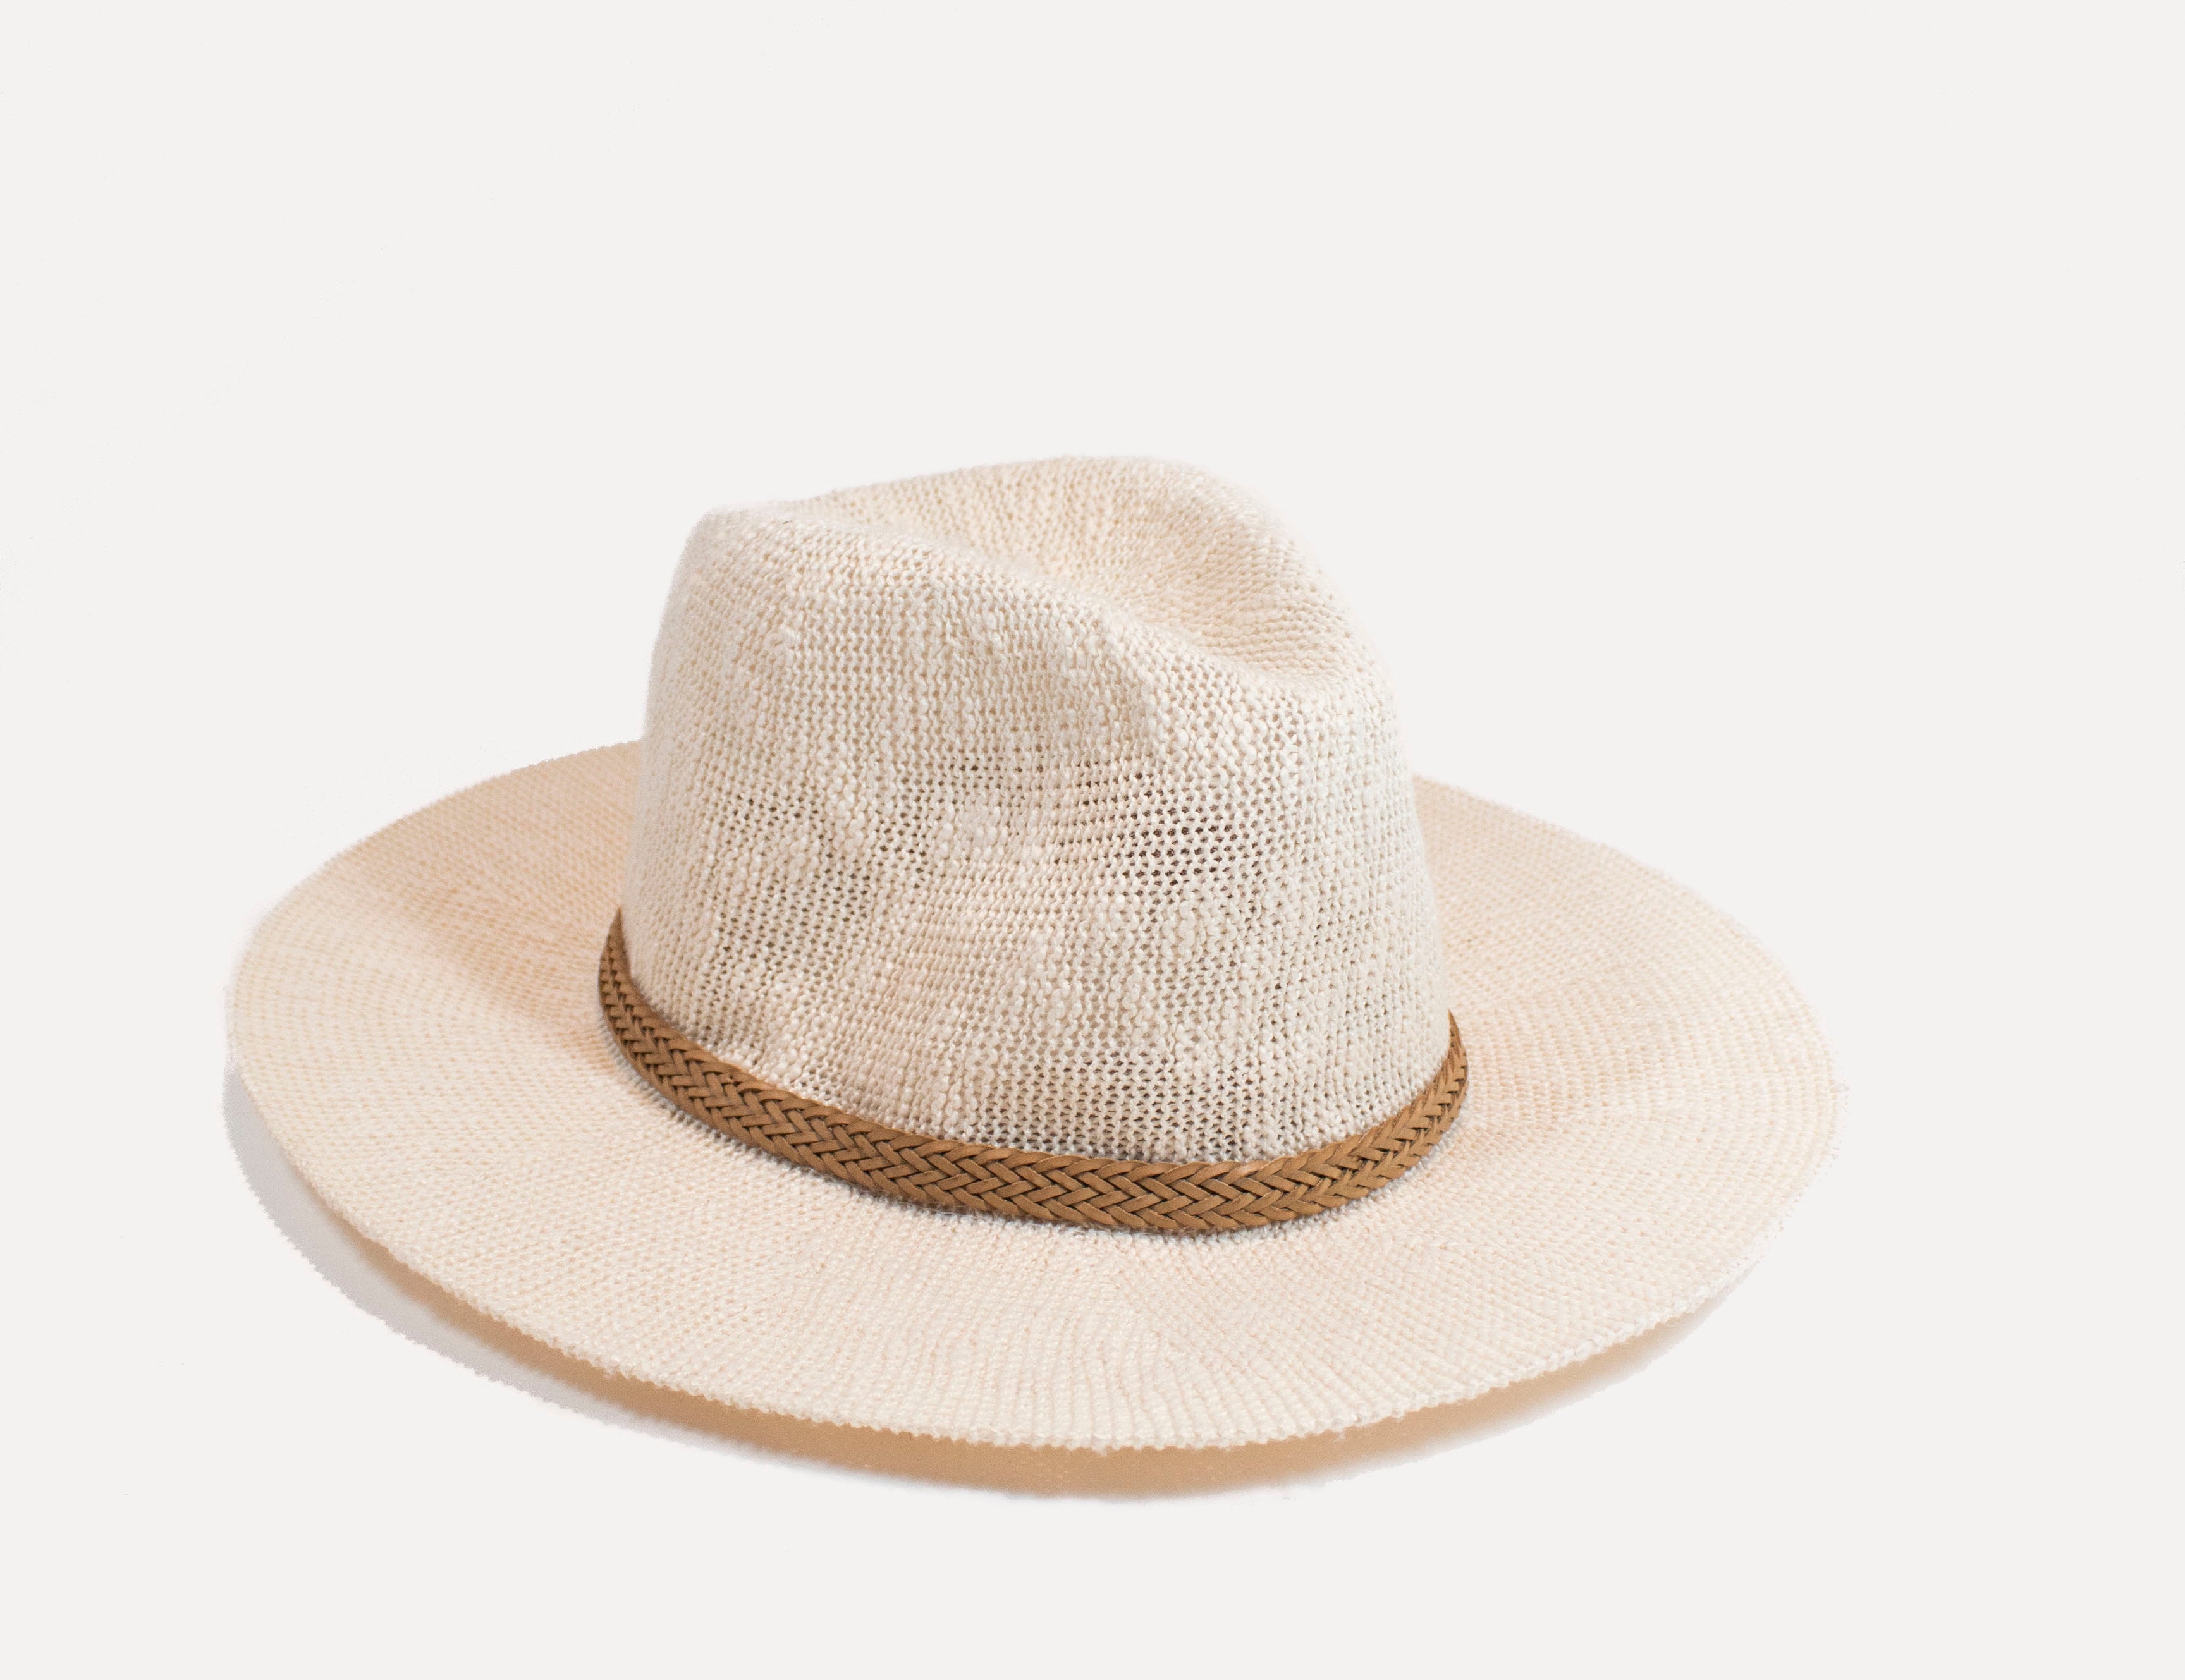 The Linen Fedora Hat